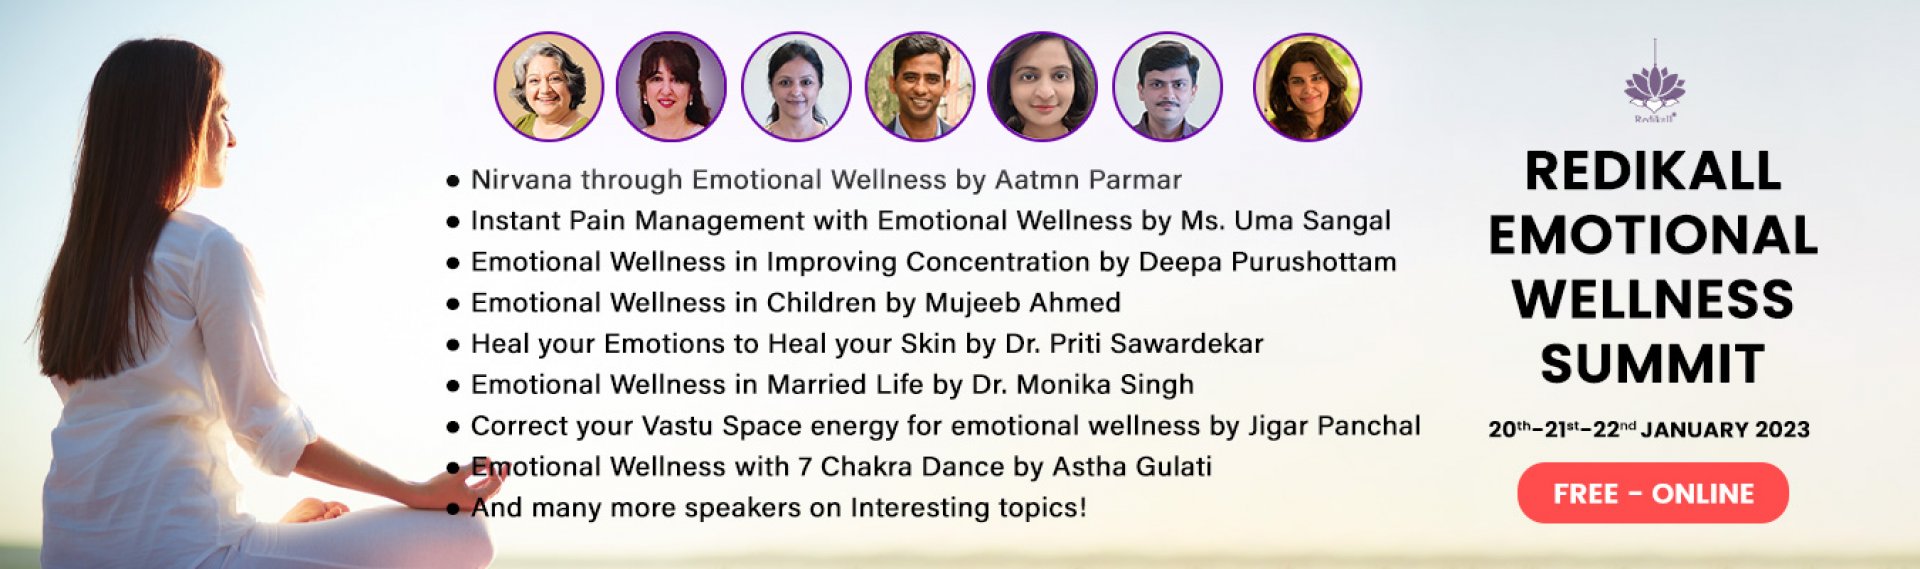 Redikall Emotional Wellness Online Summit